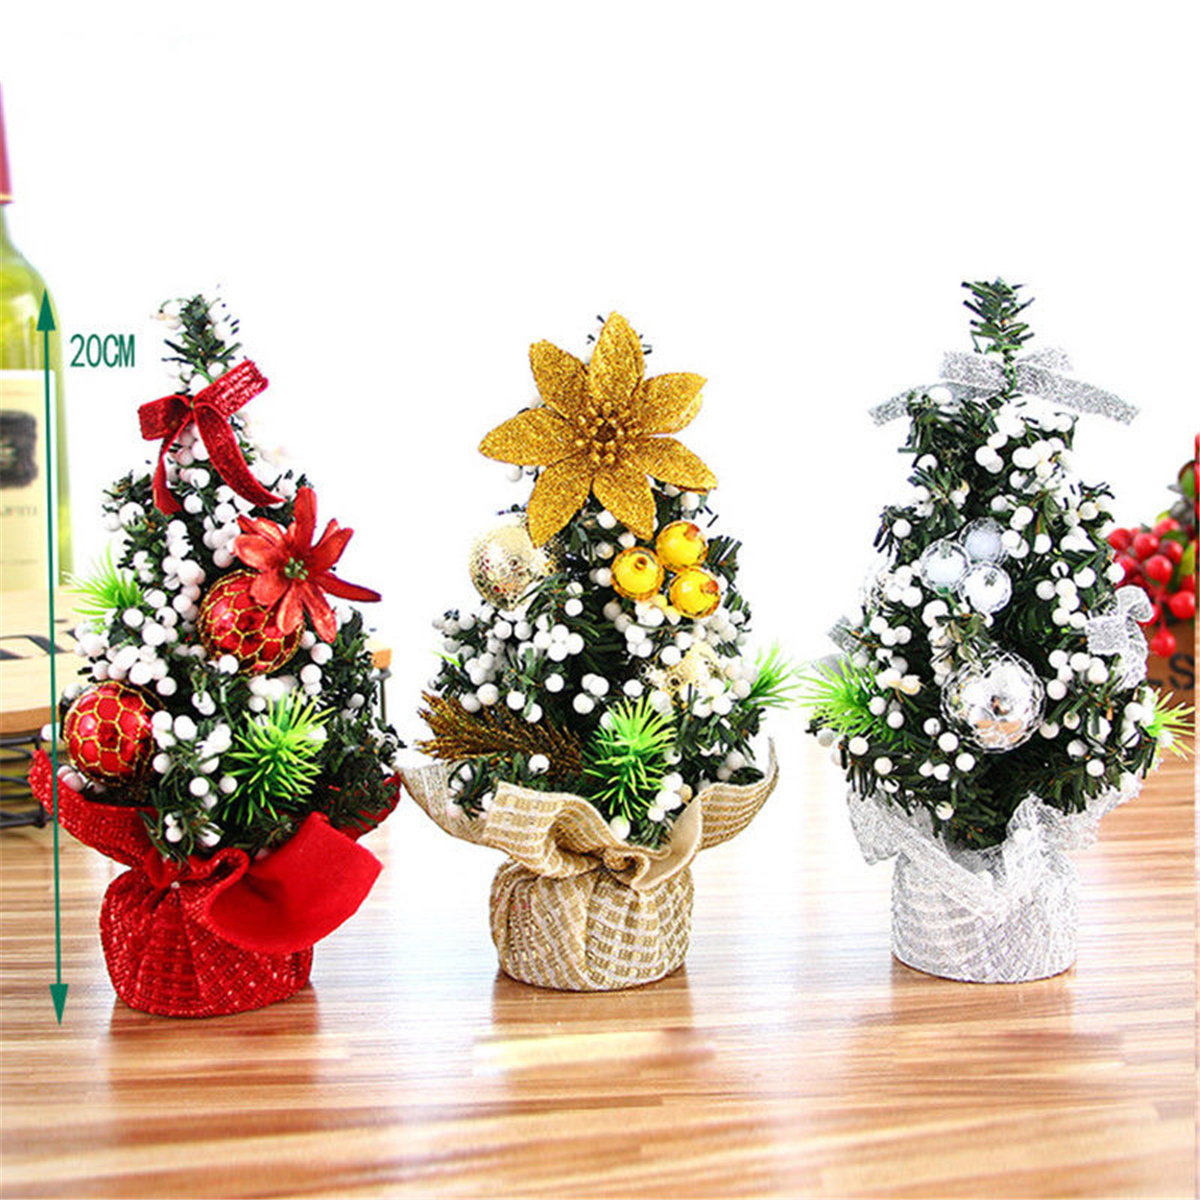 

20cm Mini Christmas Tree Flower Table Decor Festival Party Ornaments Gift, Silver